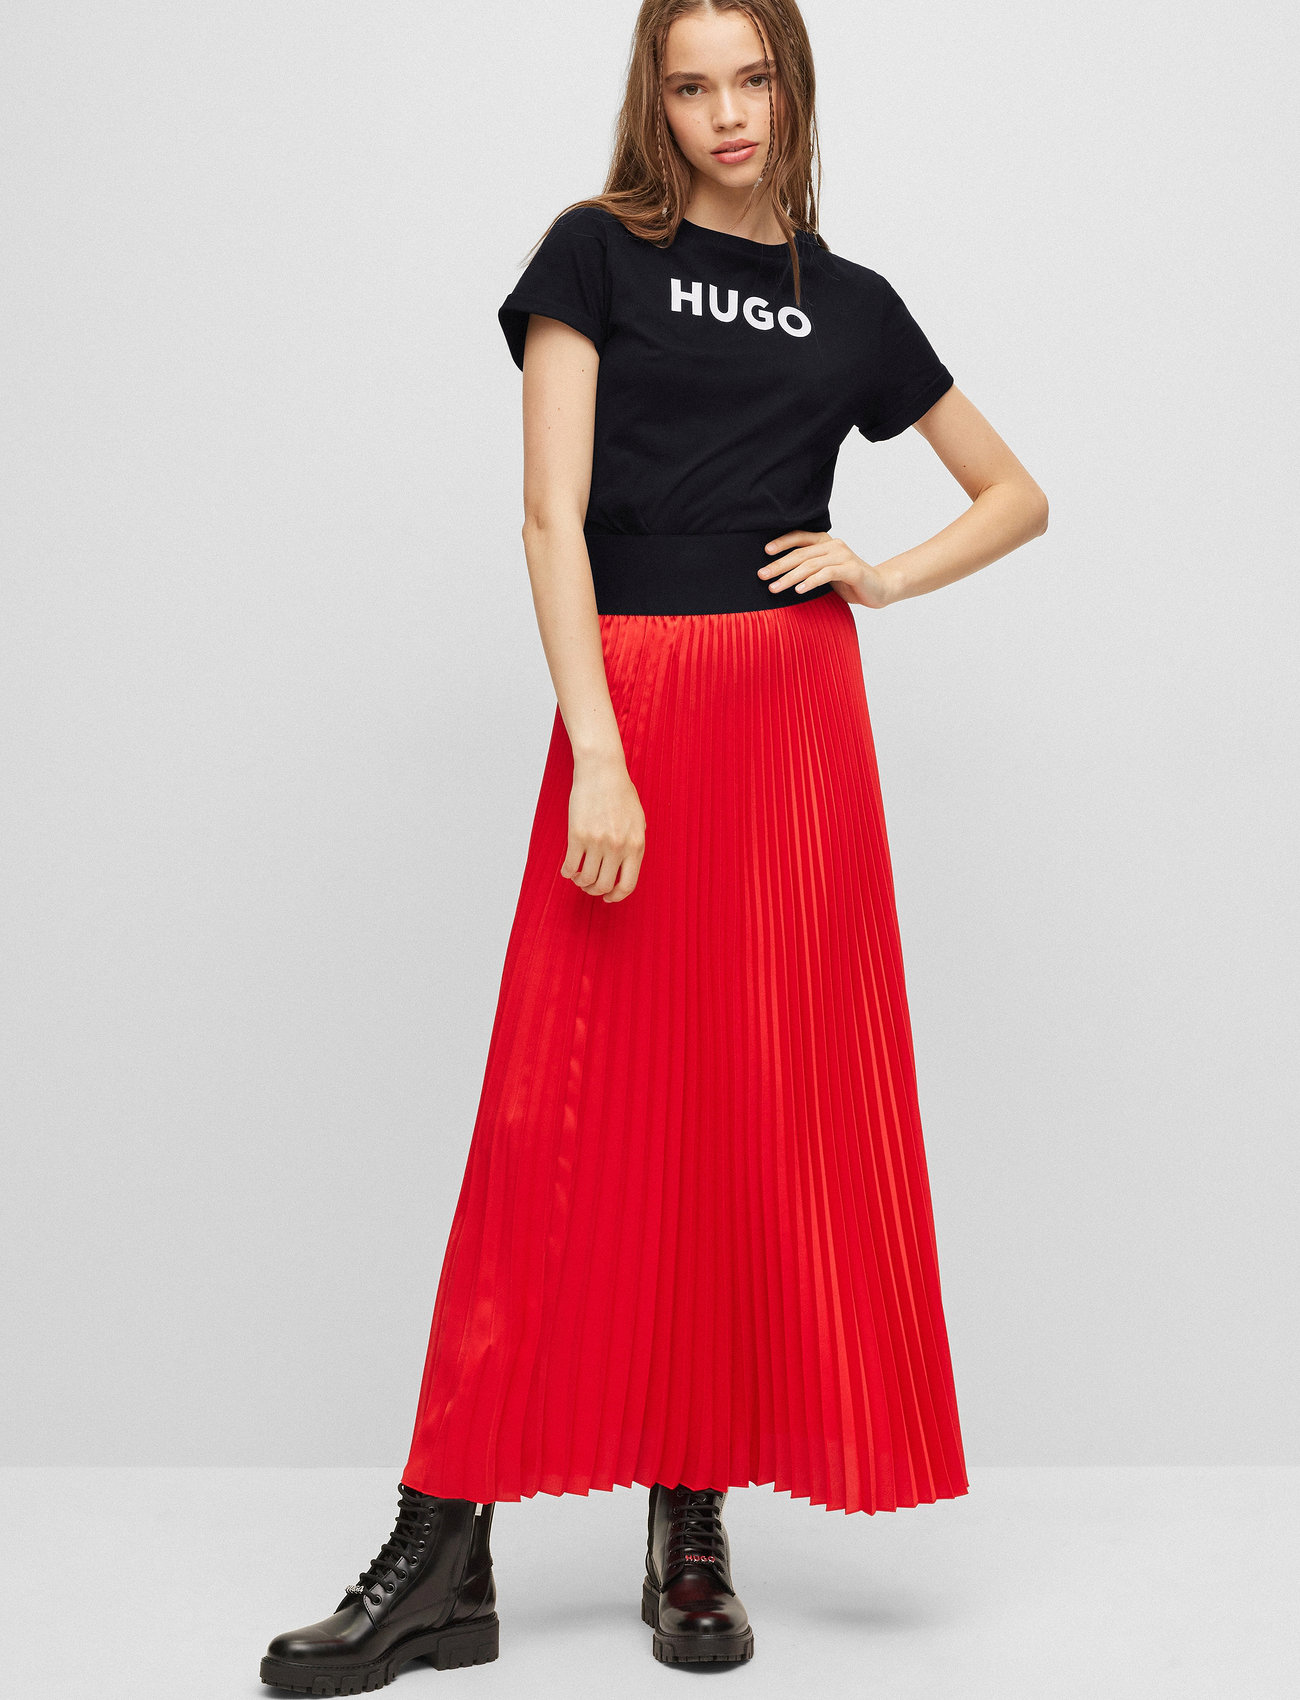 HUGO - The HUGO Tee - t-shirts - black - 1